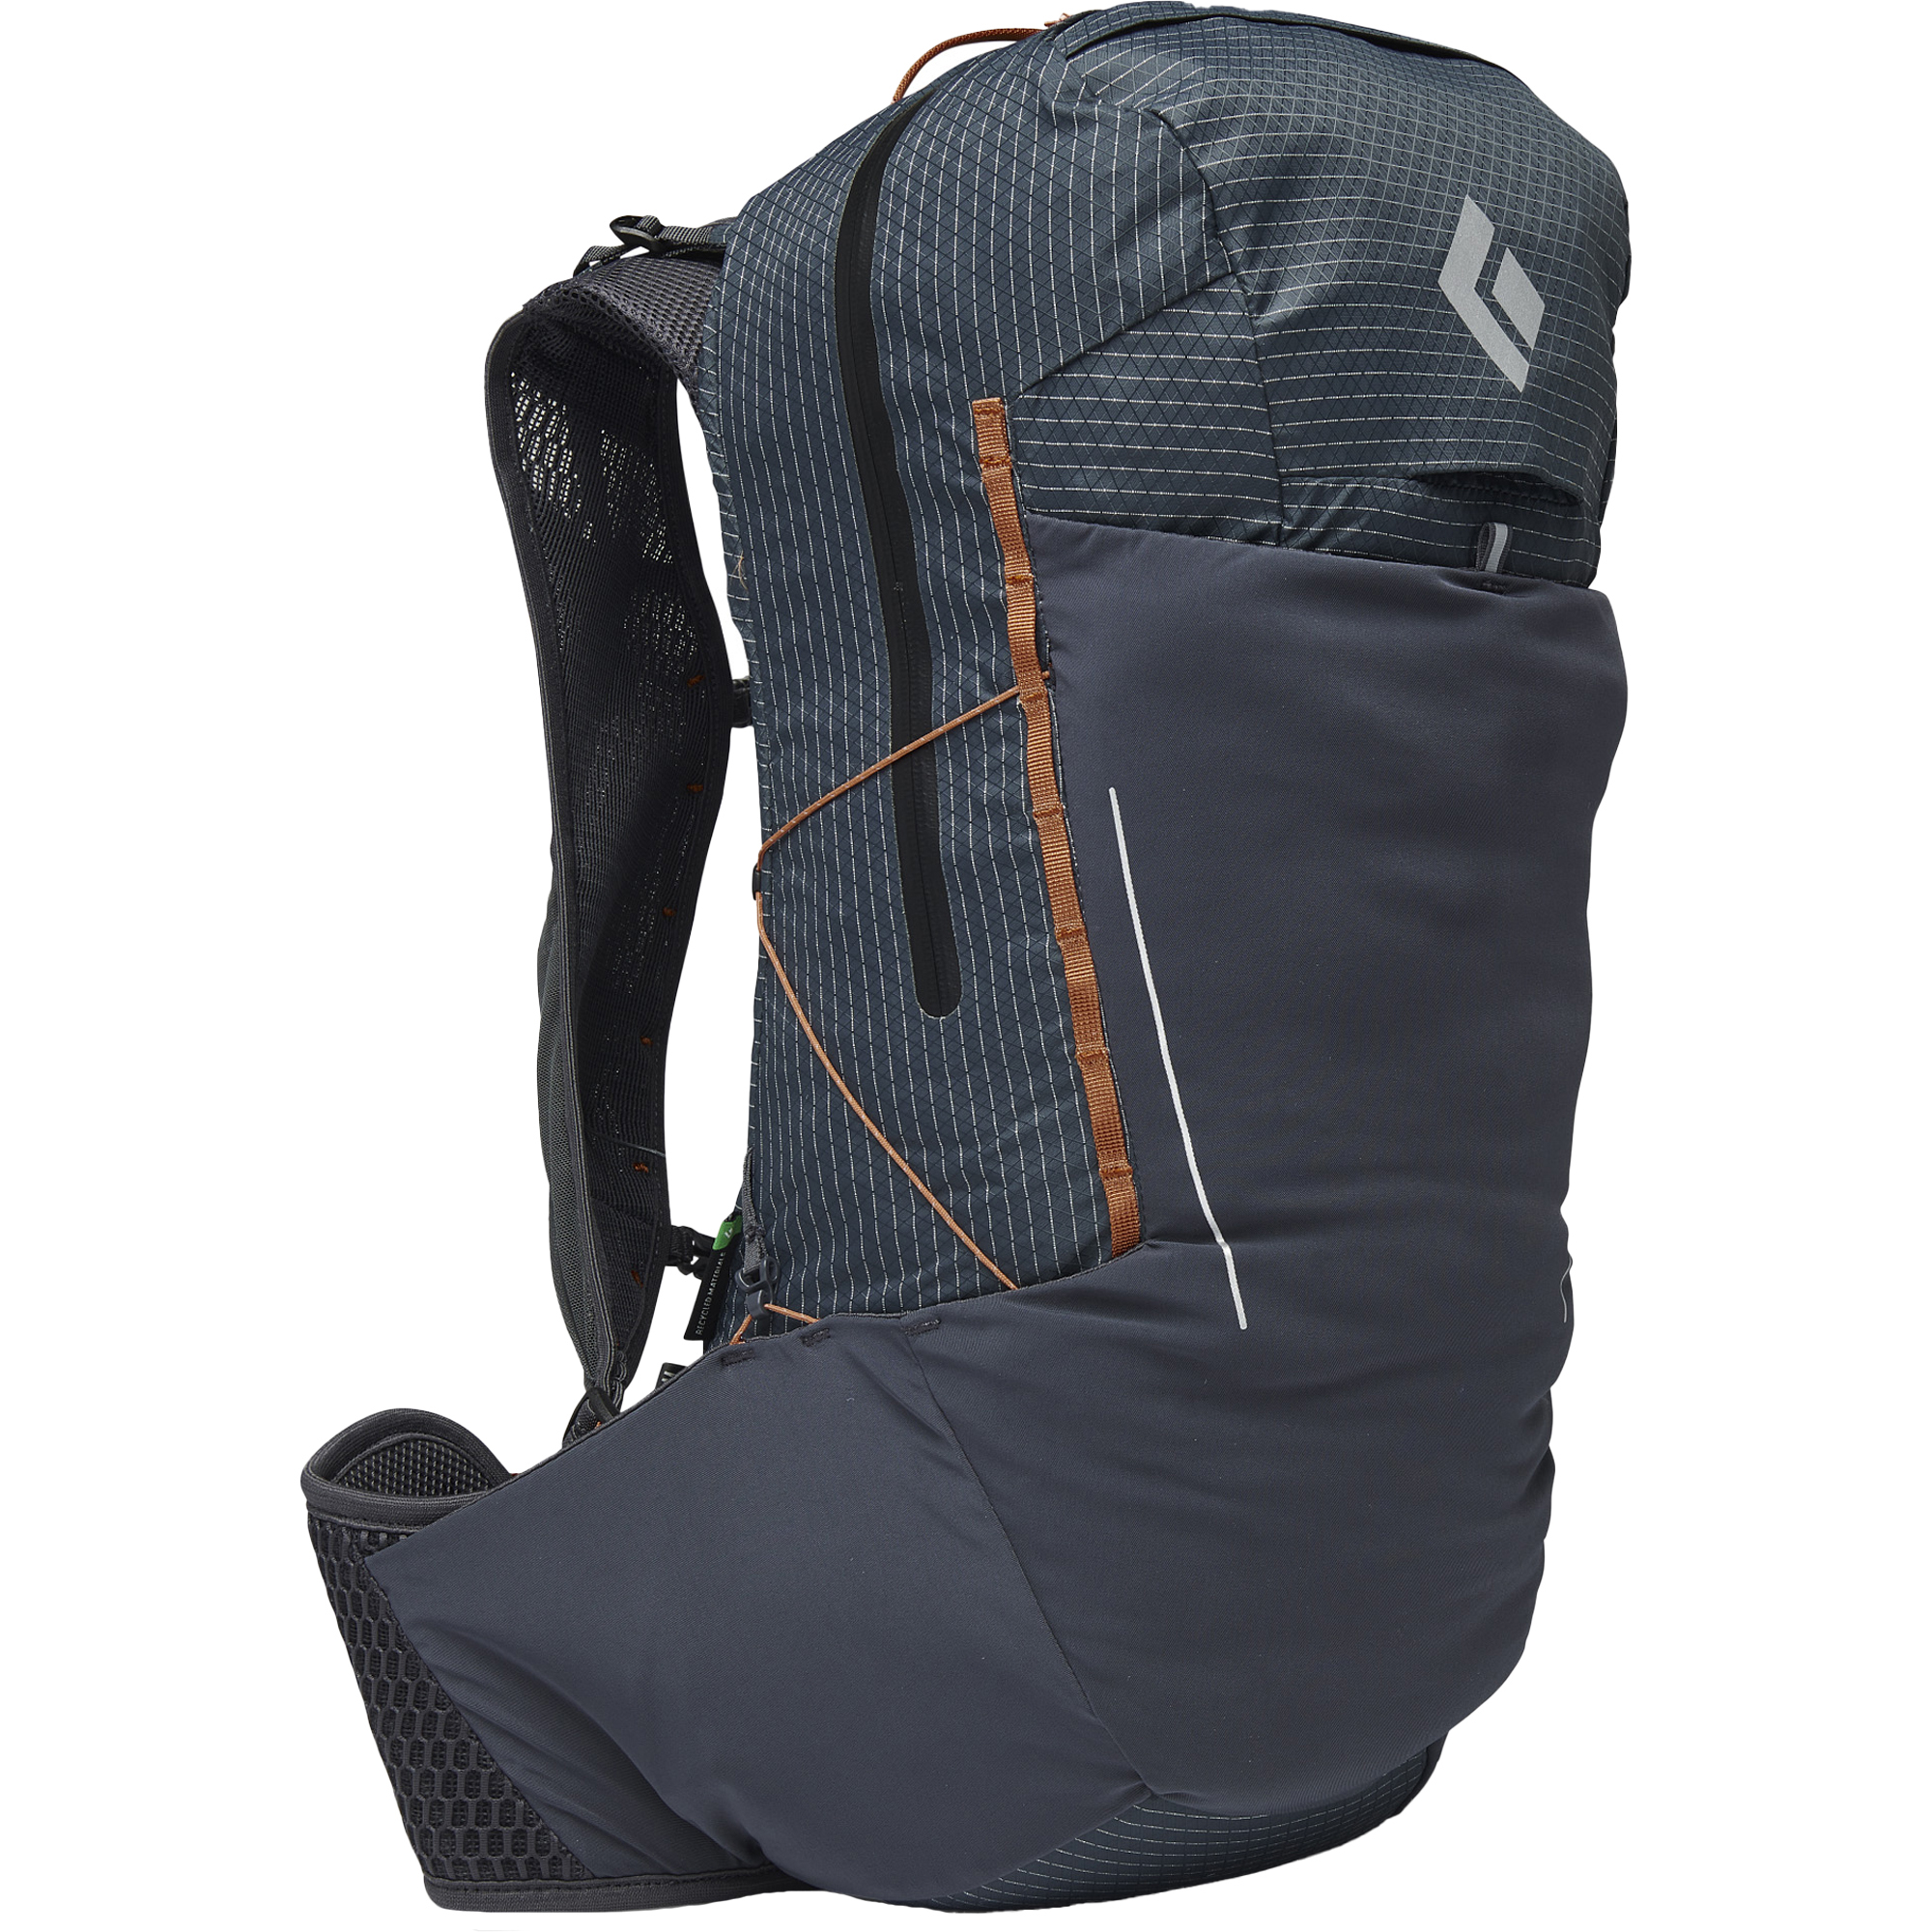 Photos - Backpack Black Diamond Pursuit Hiking /Day Pack, 30L Med Carbon/Moab BD6800 